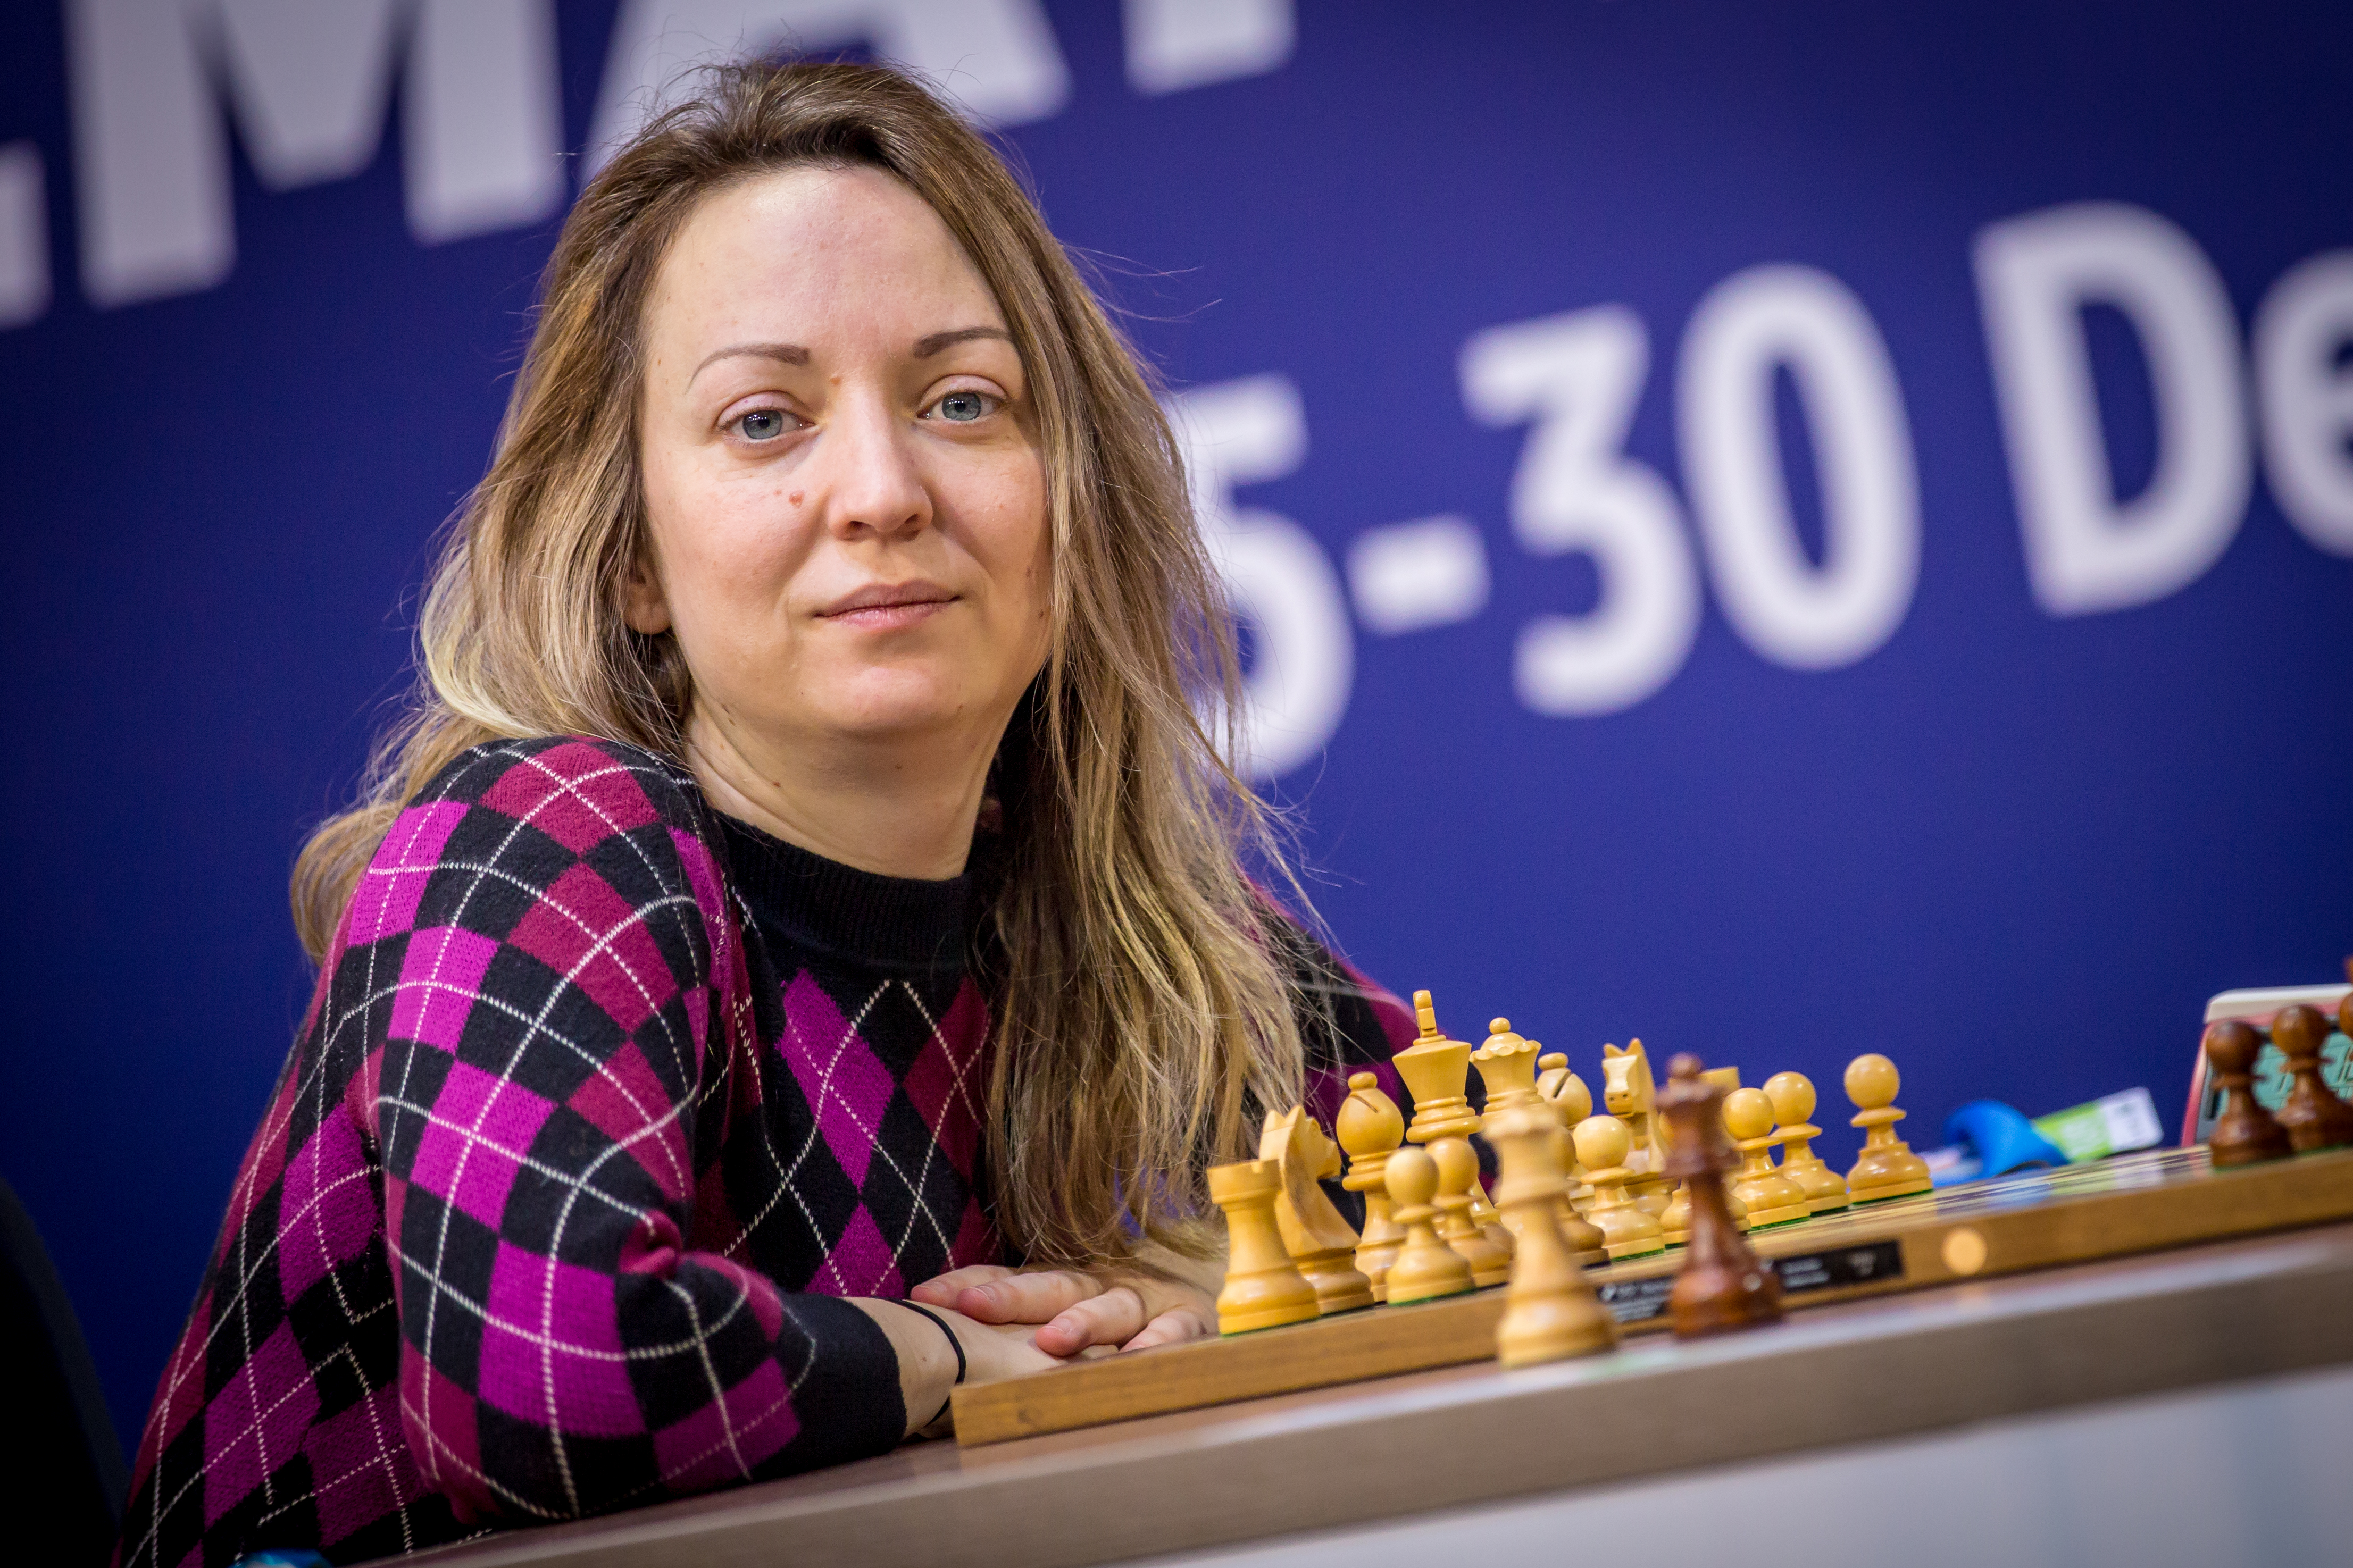 Tin Jingyao vs Hans Moke Niemann: FIDE World Rapid Chess Championship 2022  Round 13 